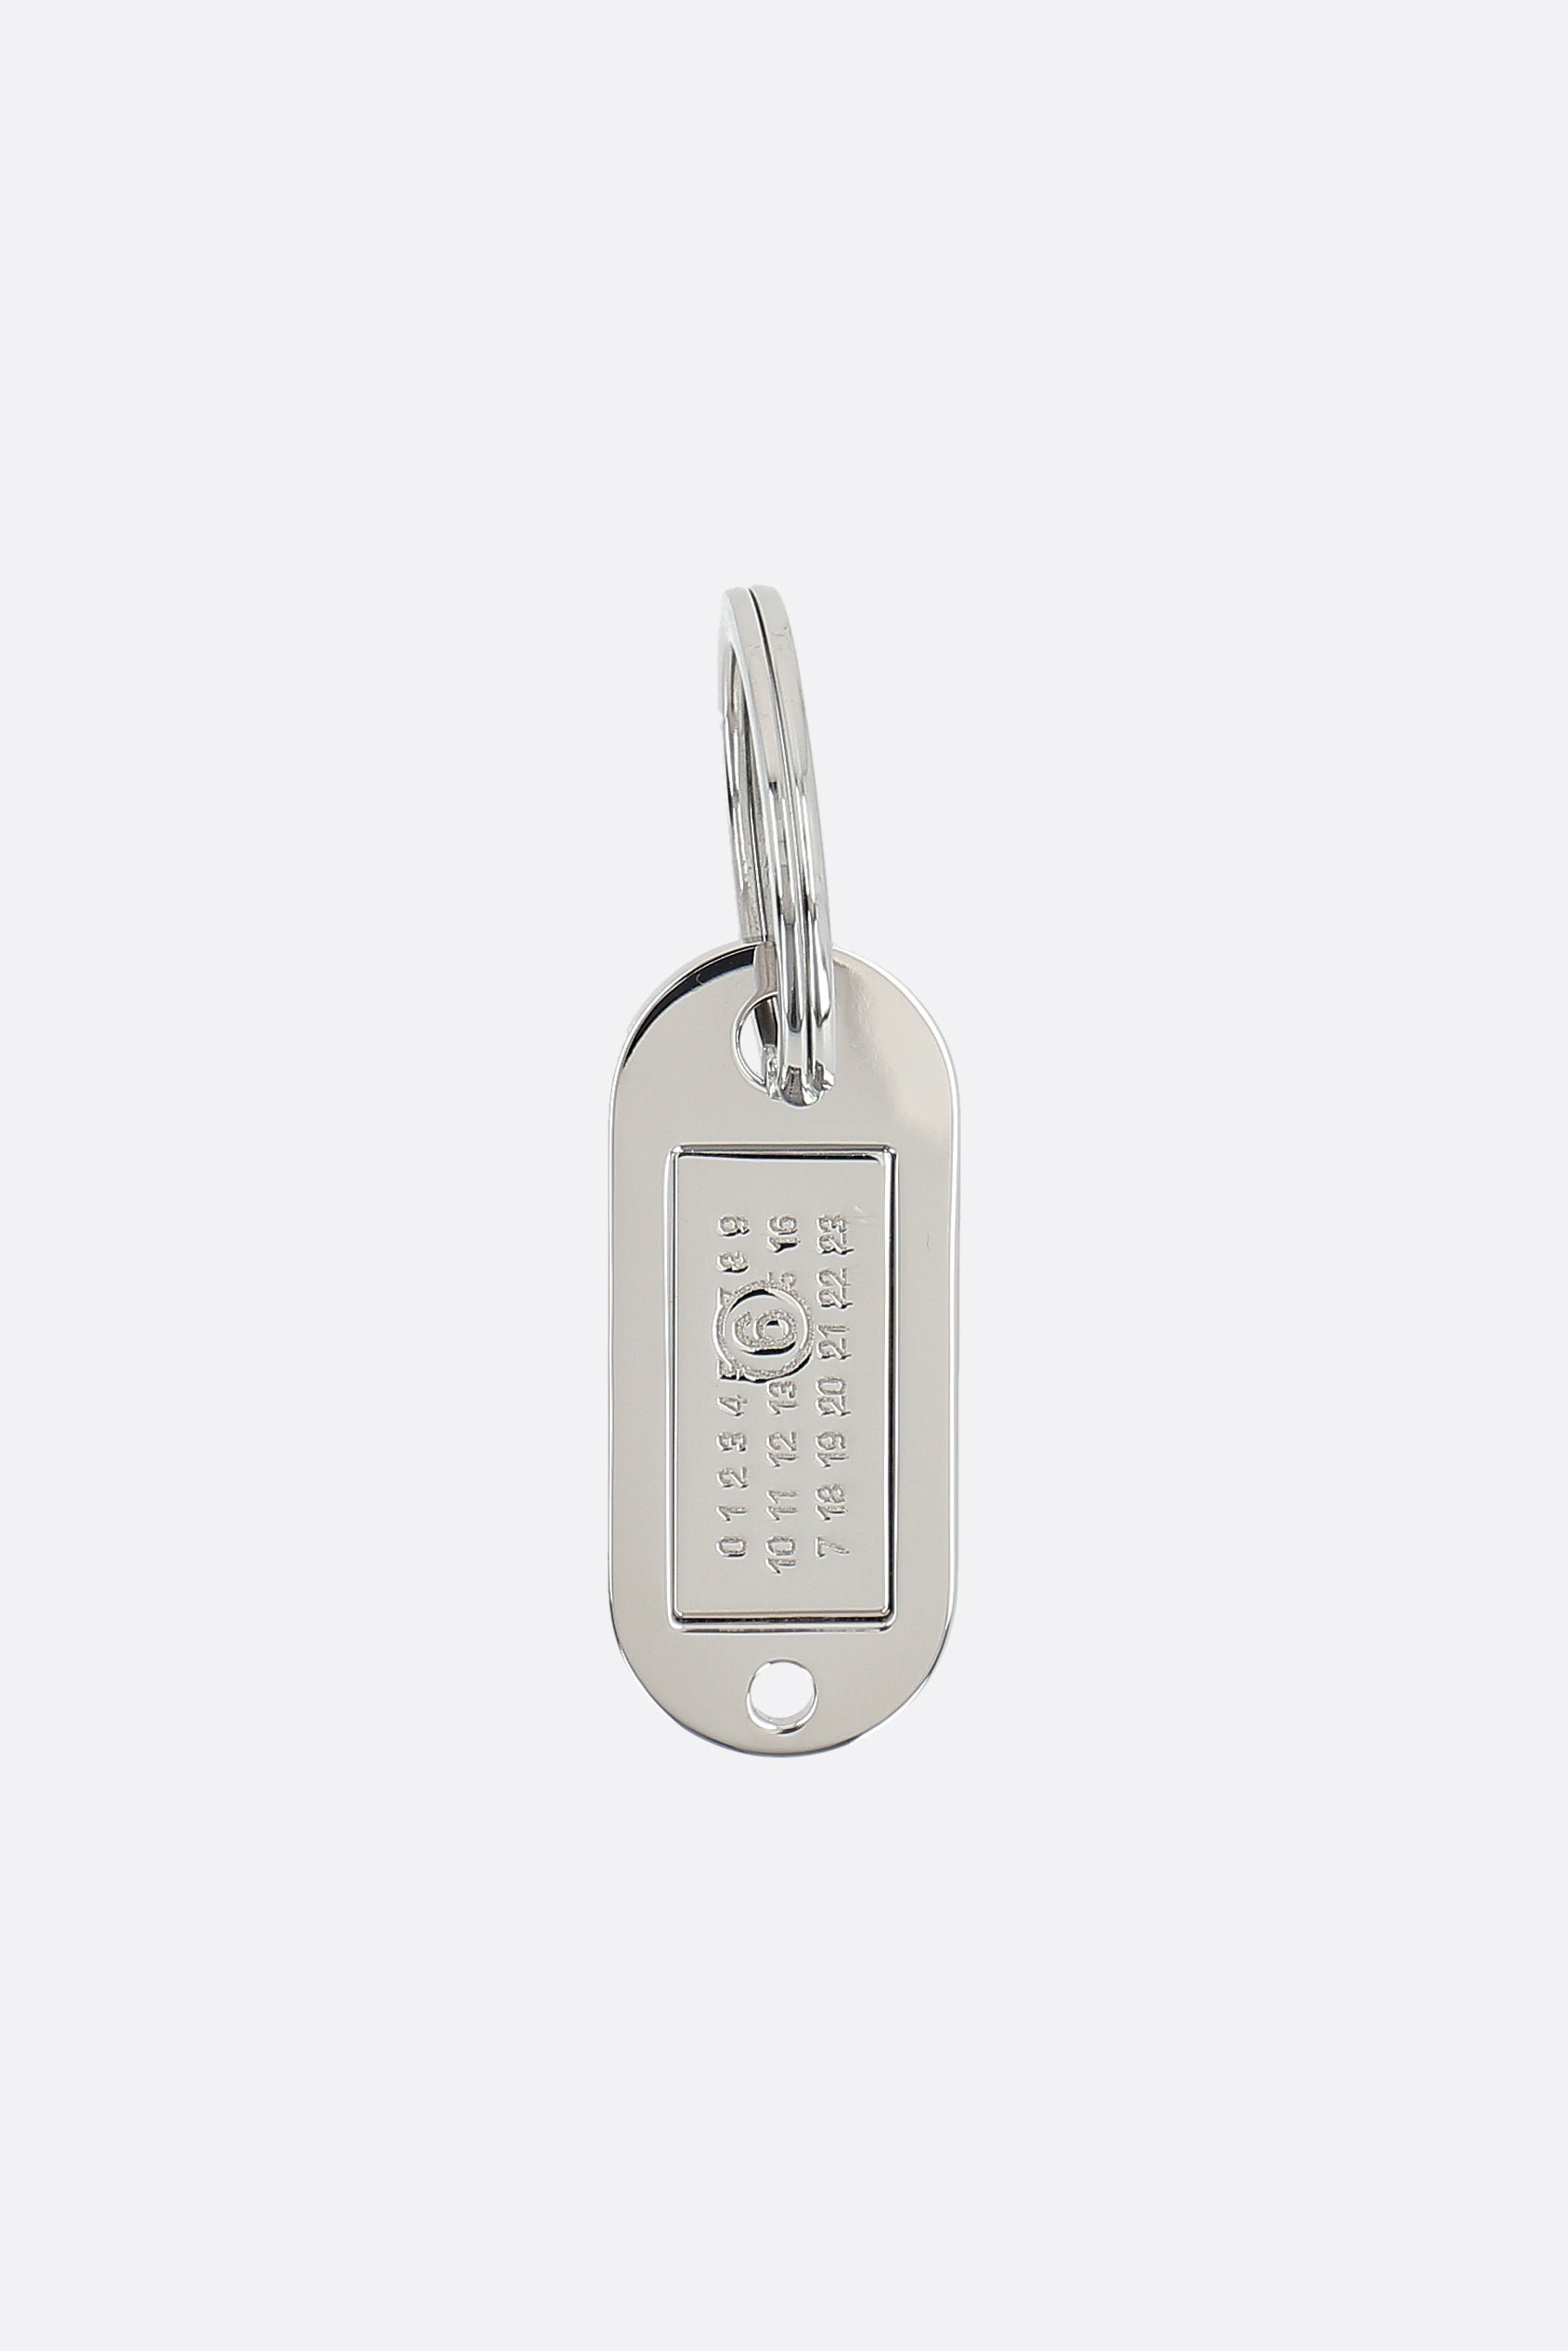 tag-detailed brass key holder